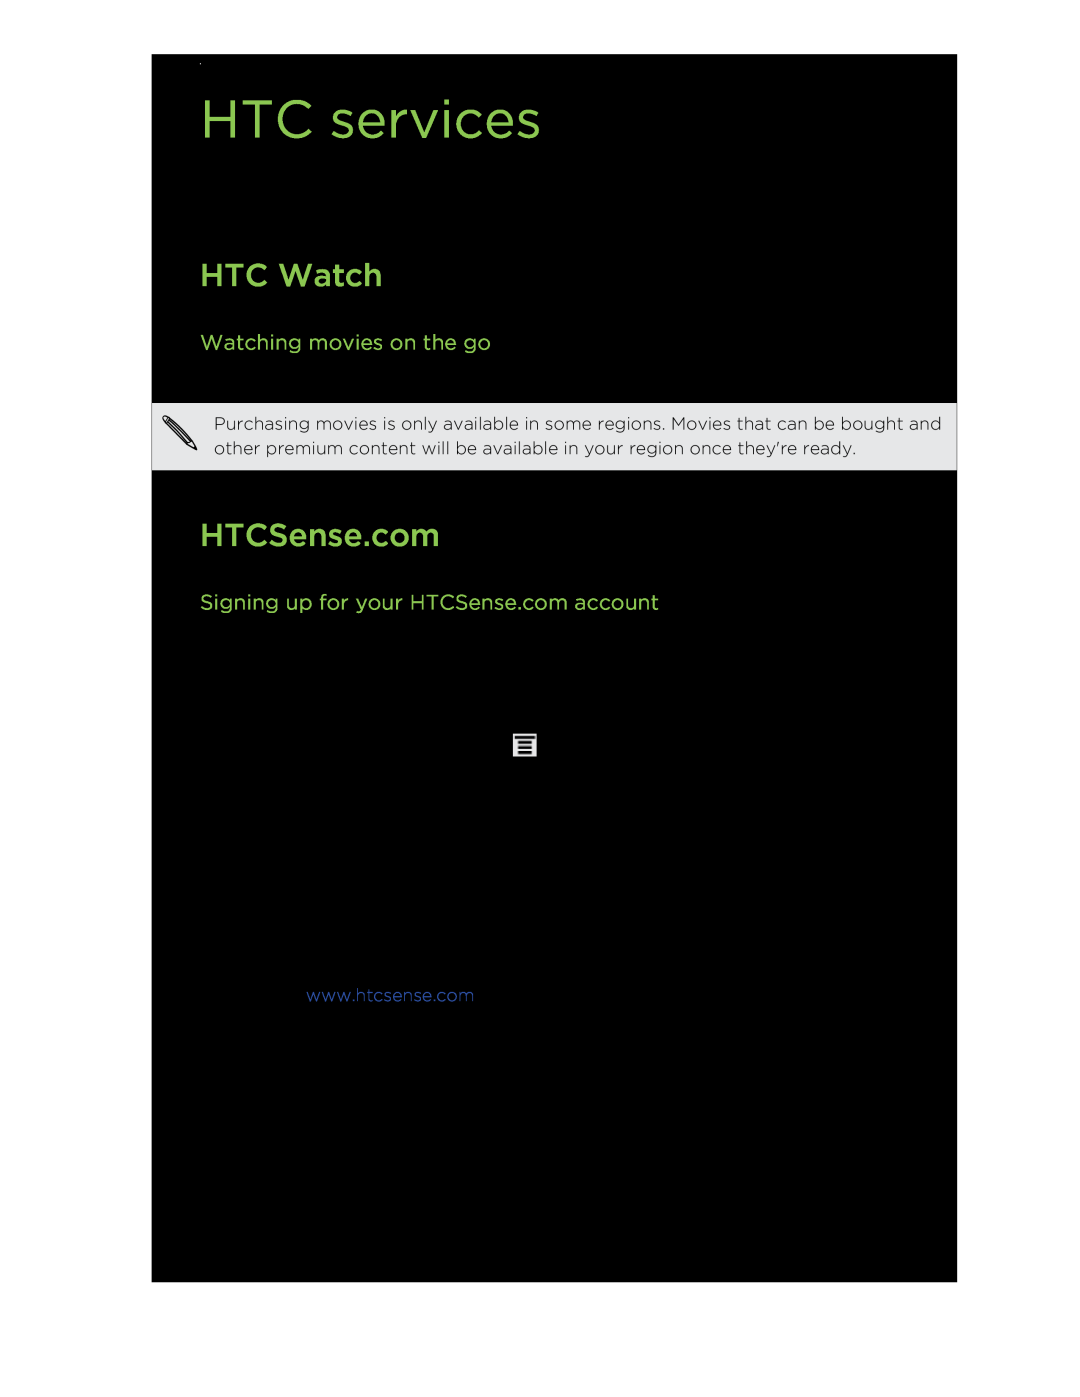 HTC HTCFlyerP512 manual HTC services, HTC Watch, HTCSense.com, Watching movies on the go 